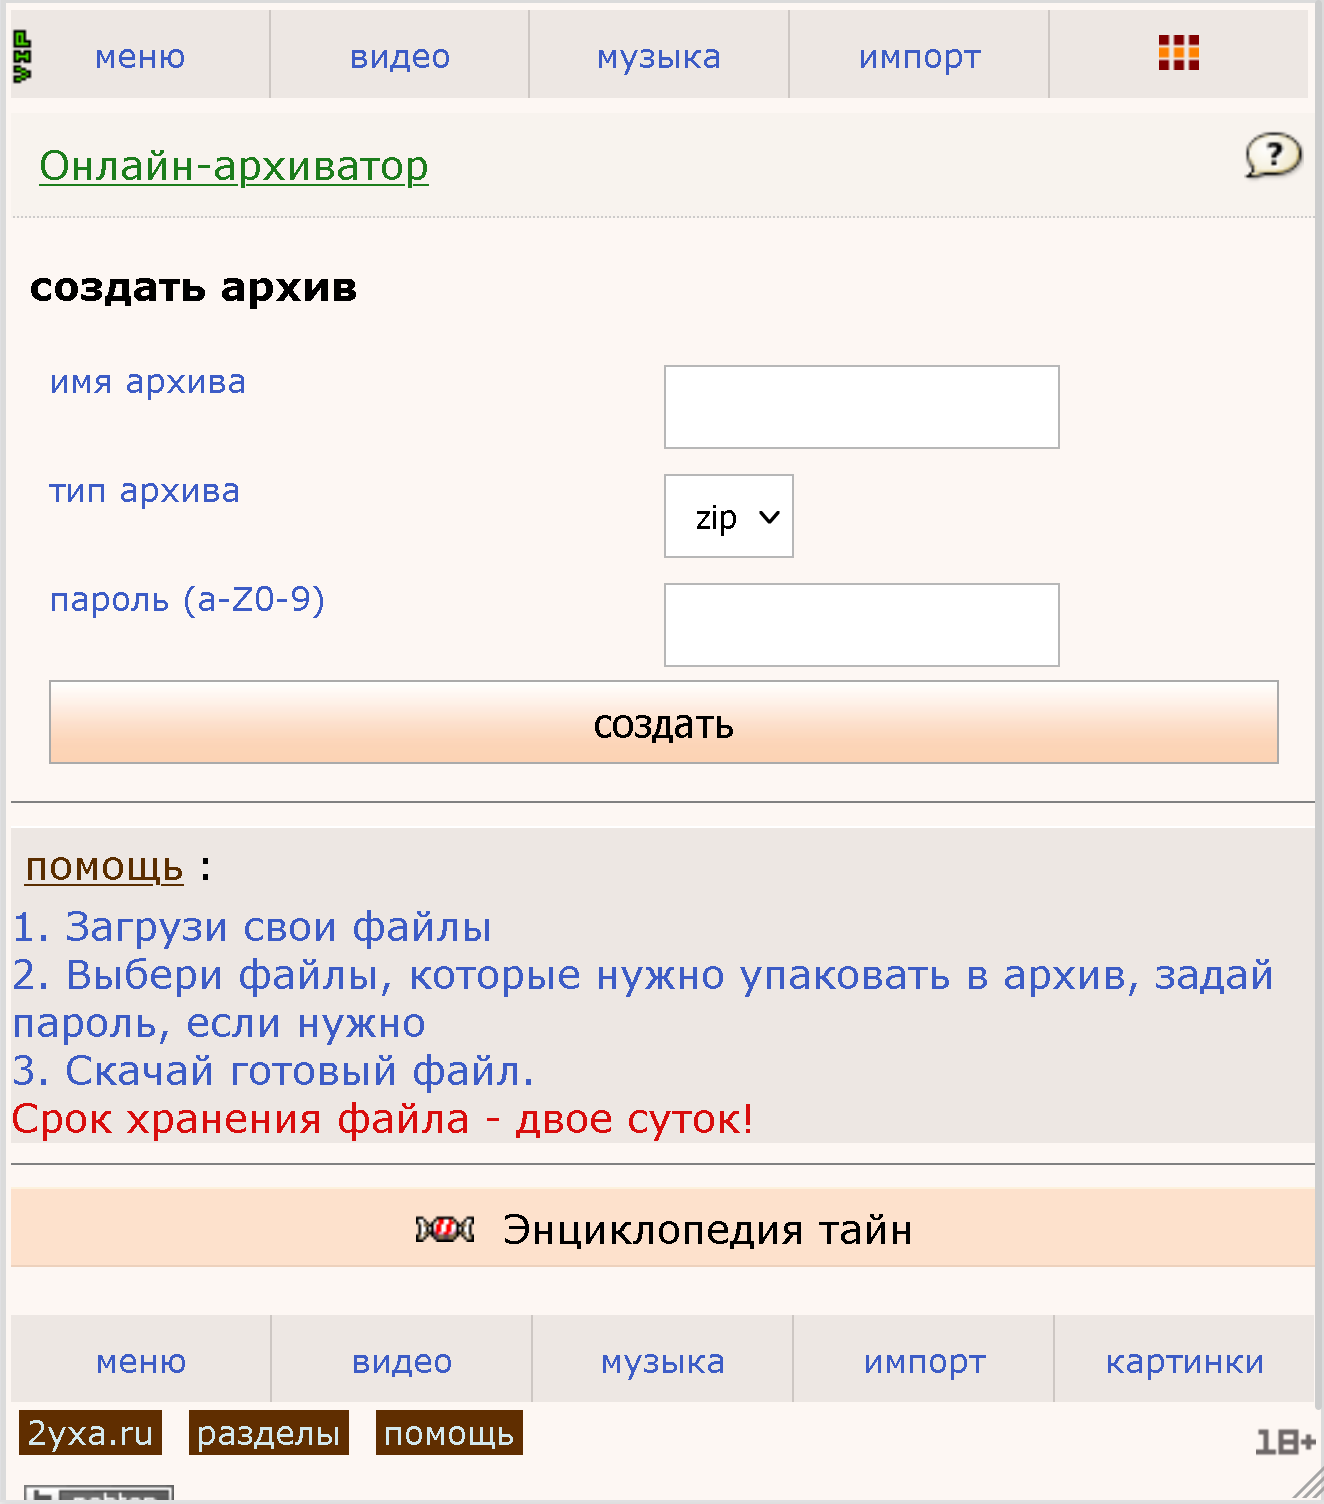 Как Архивировать Онлайн :: 2yxa.Ru